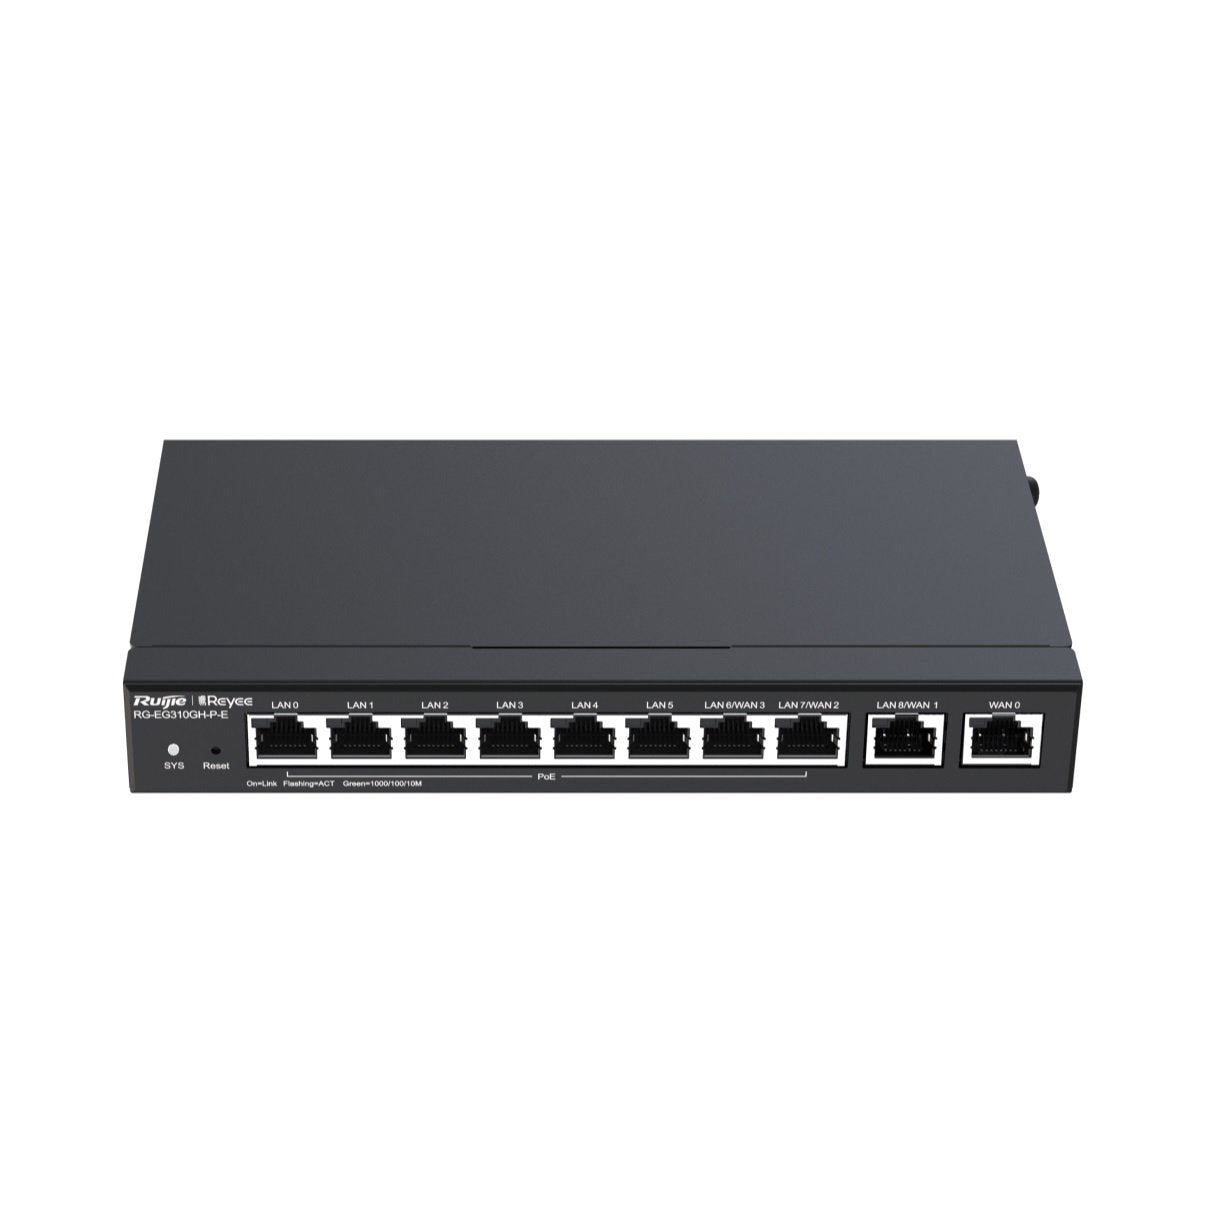 Ruijie* Reyee 10-Port Gigabit Cloud Managed POE Router, 1 x WAN, 6 x LAN, 3 x LAN / WAN, 8 x POE, 110W